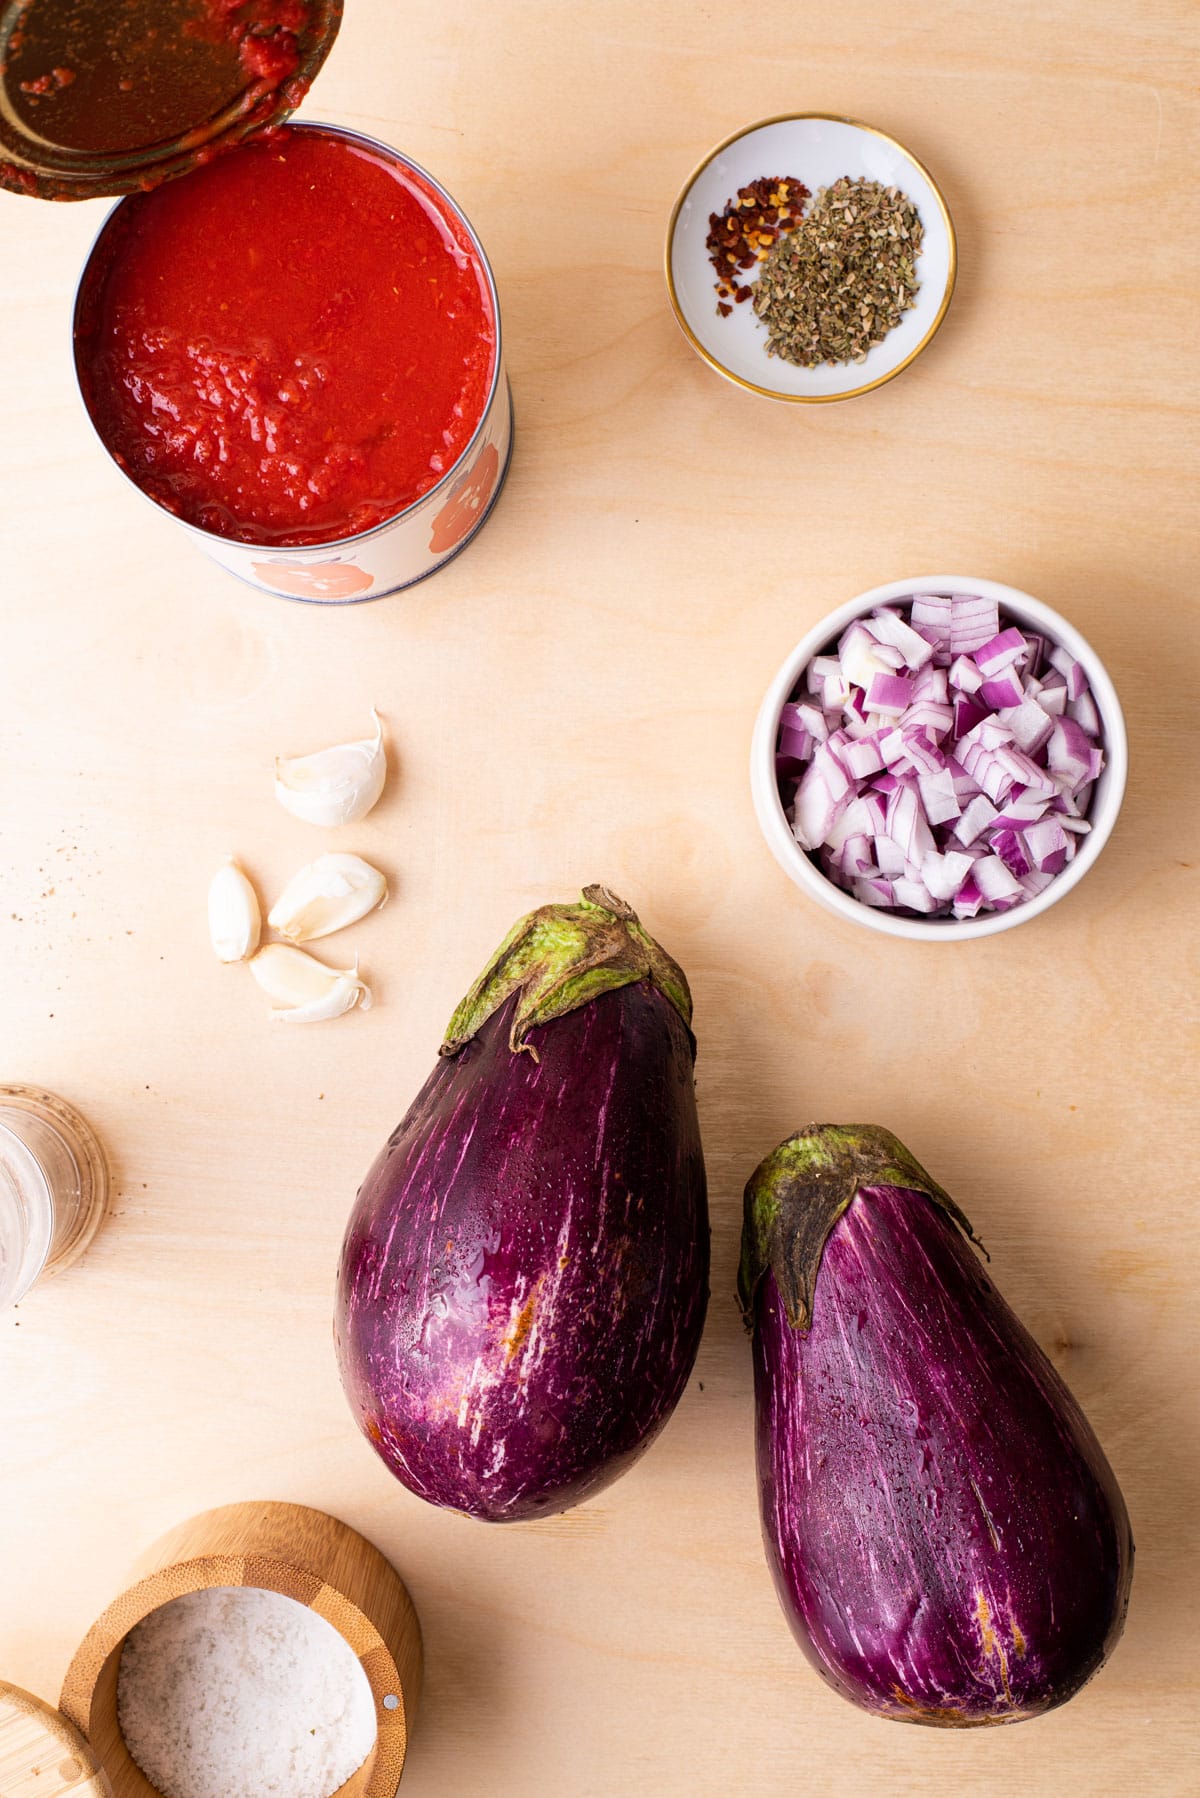 Ingredients gathered to make tomato eggplant stew.